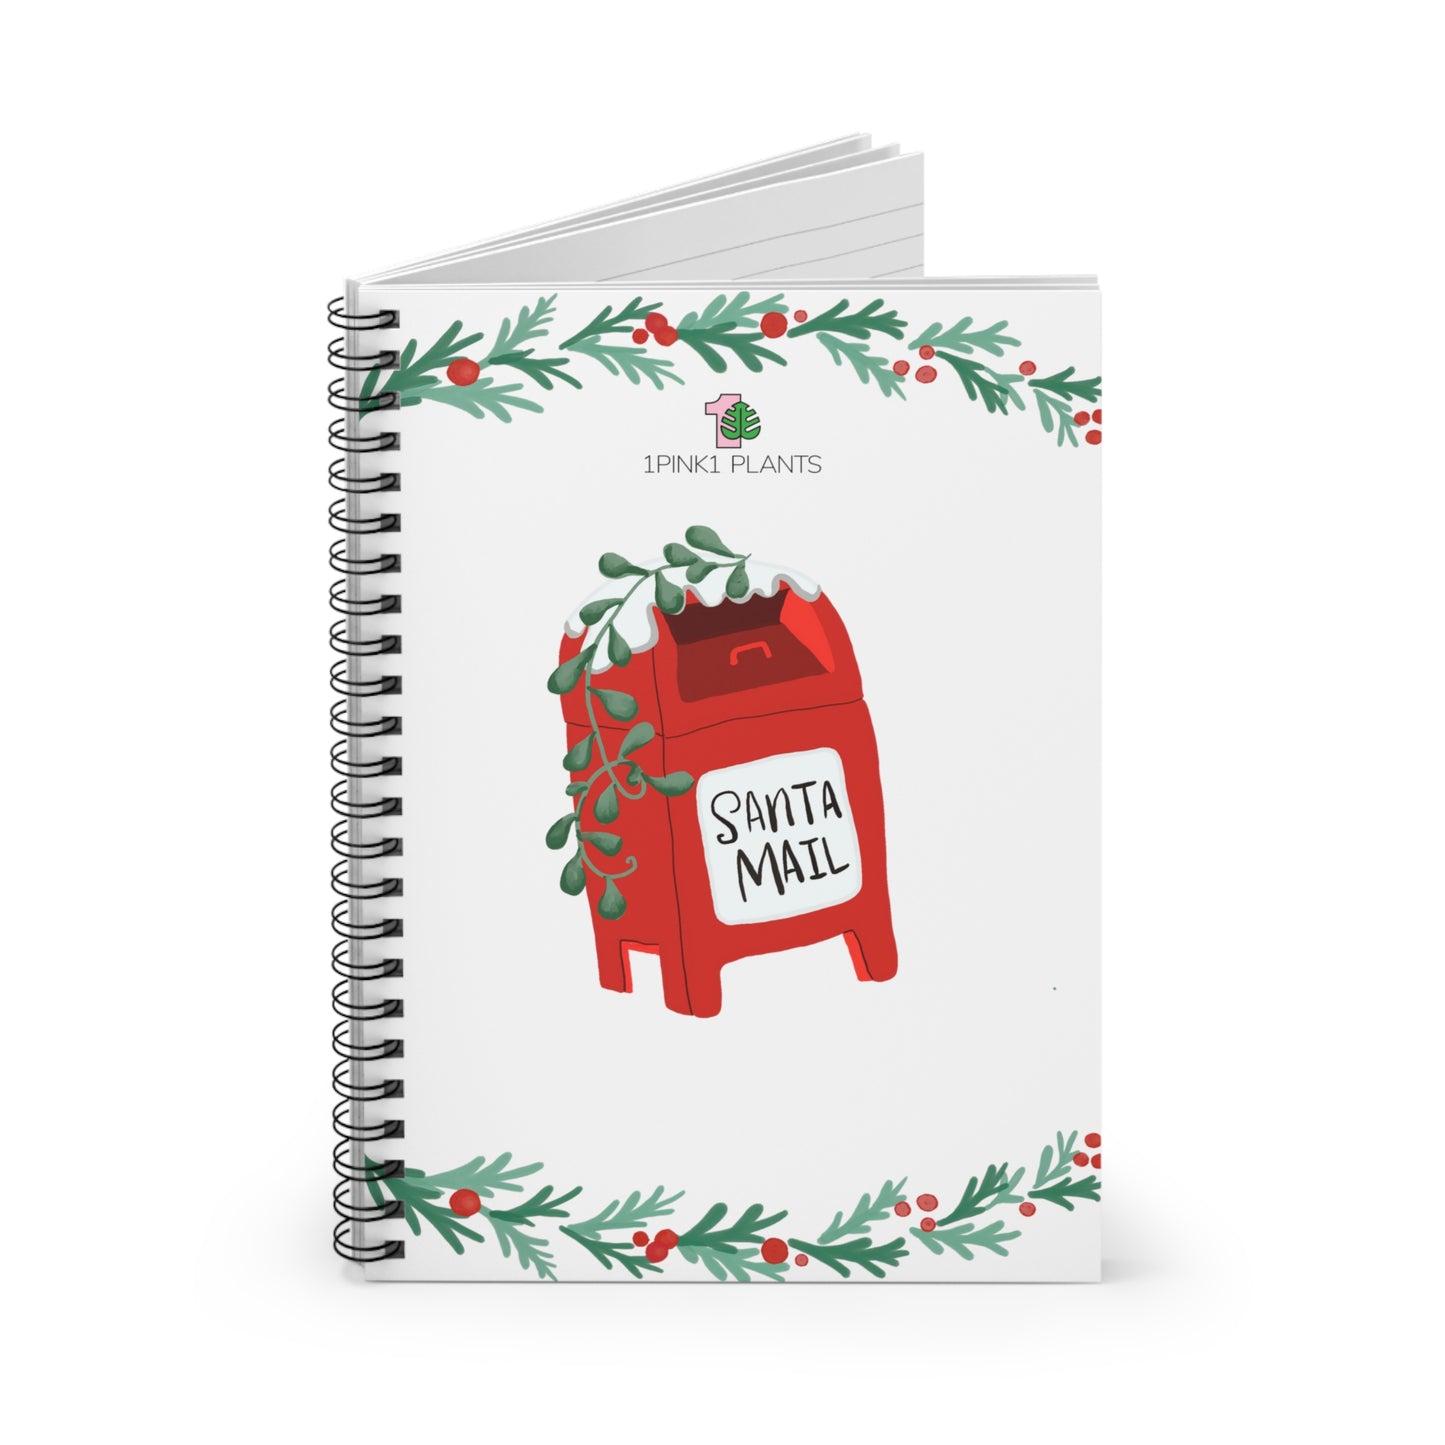 Santa Mail Spiral Notebook - Ruled Line